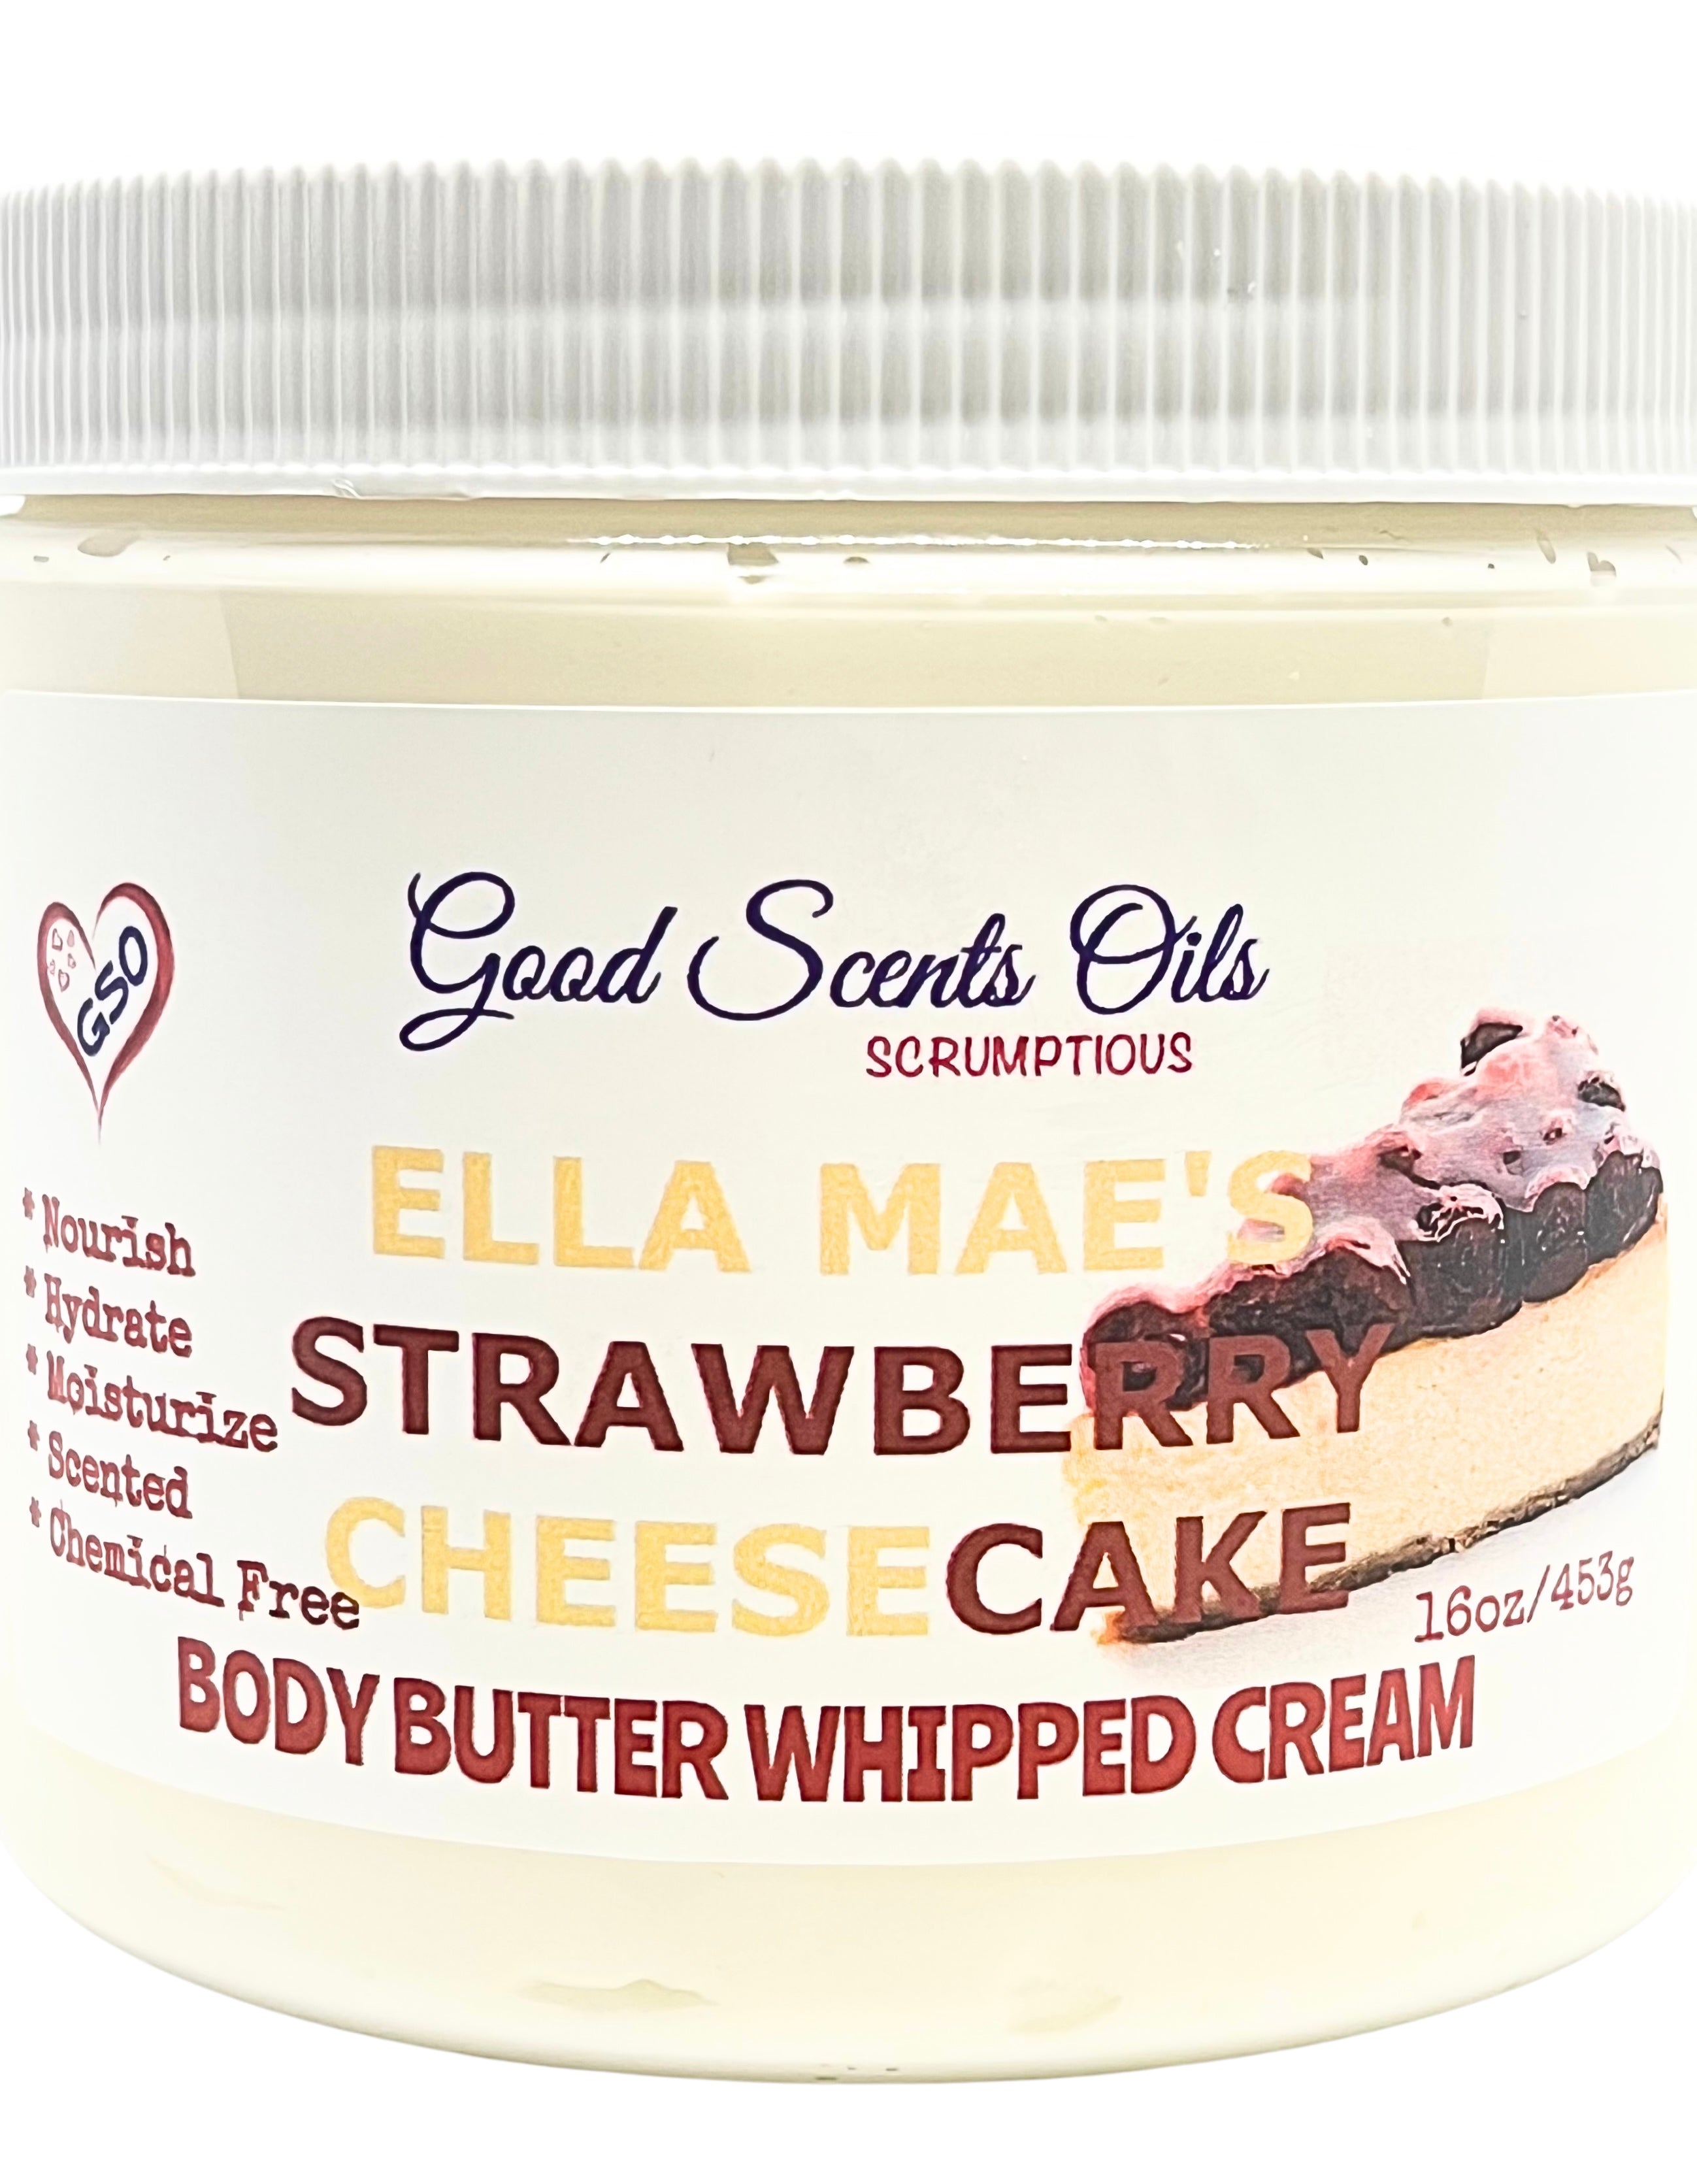 Whipped Body Butter Strawberry Shortcake Scented Moisturizer for Women